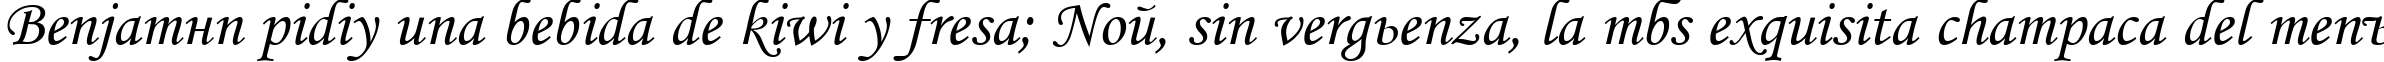 Пример написания шрифтом Corsiva Cyr текста на испанском